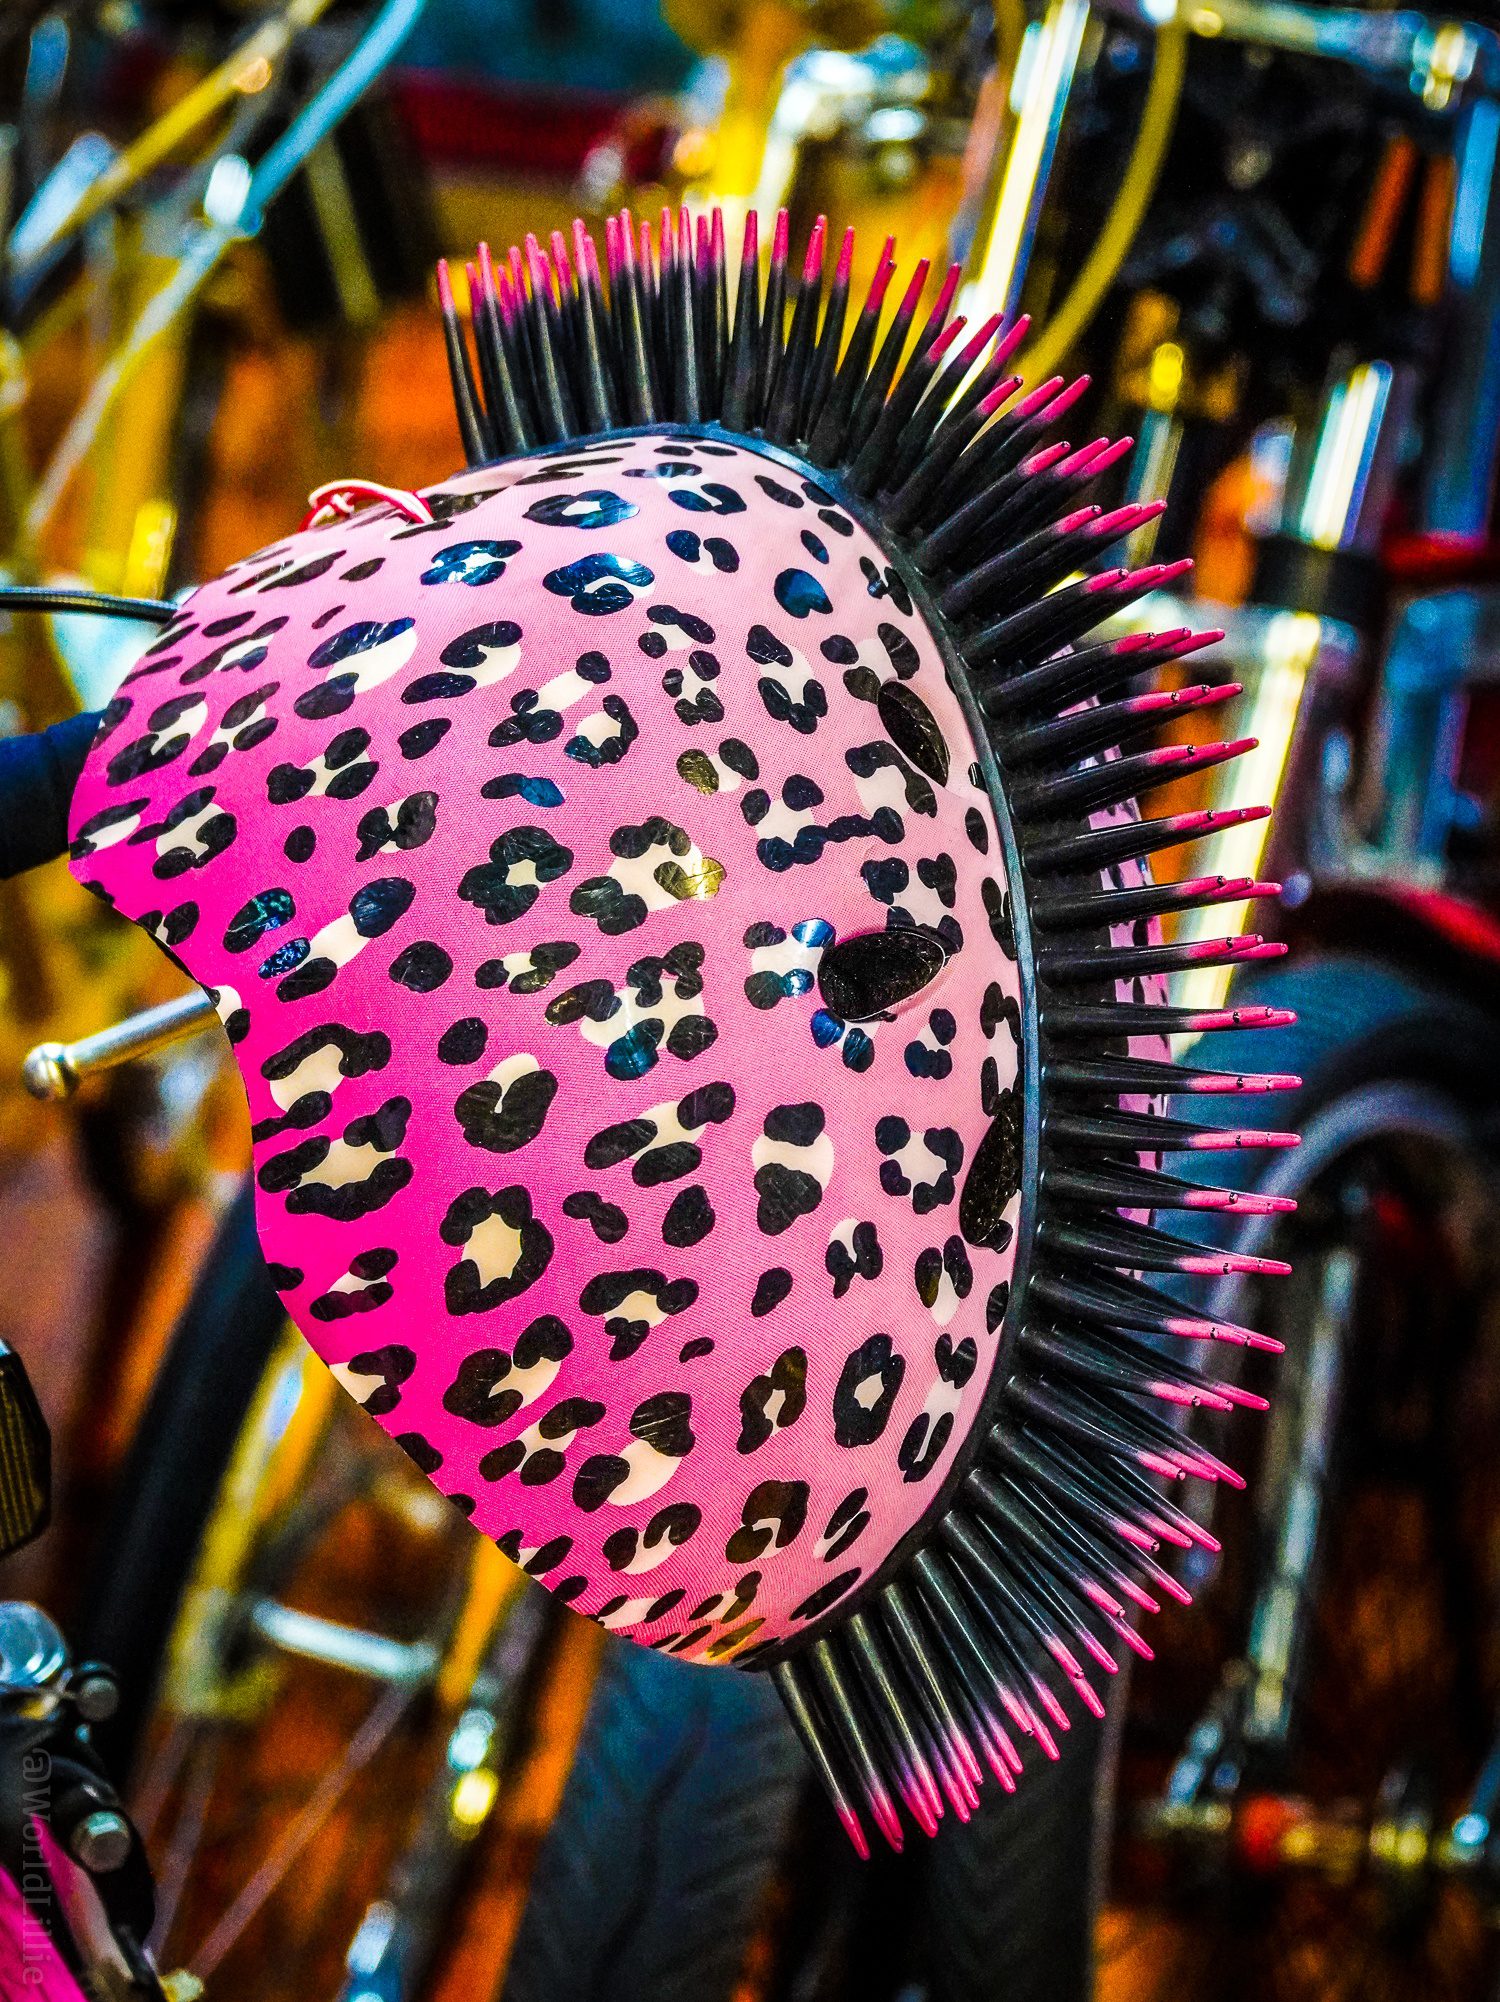 Spiky pink leopard print bike helmet for the win.